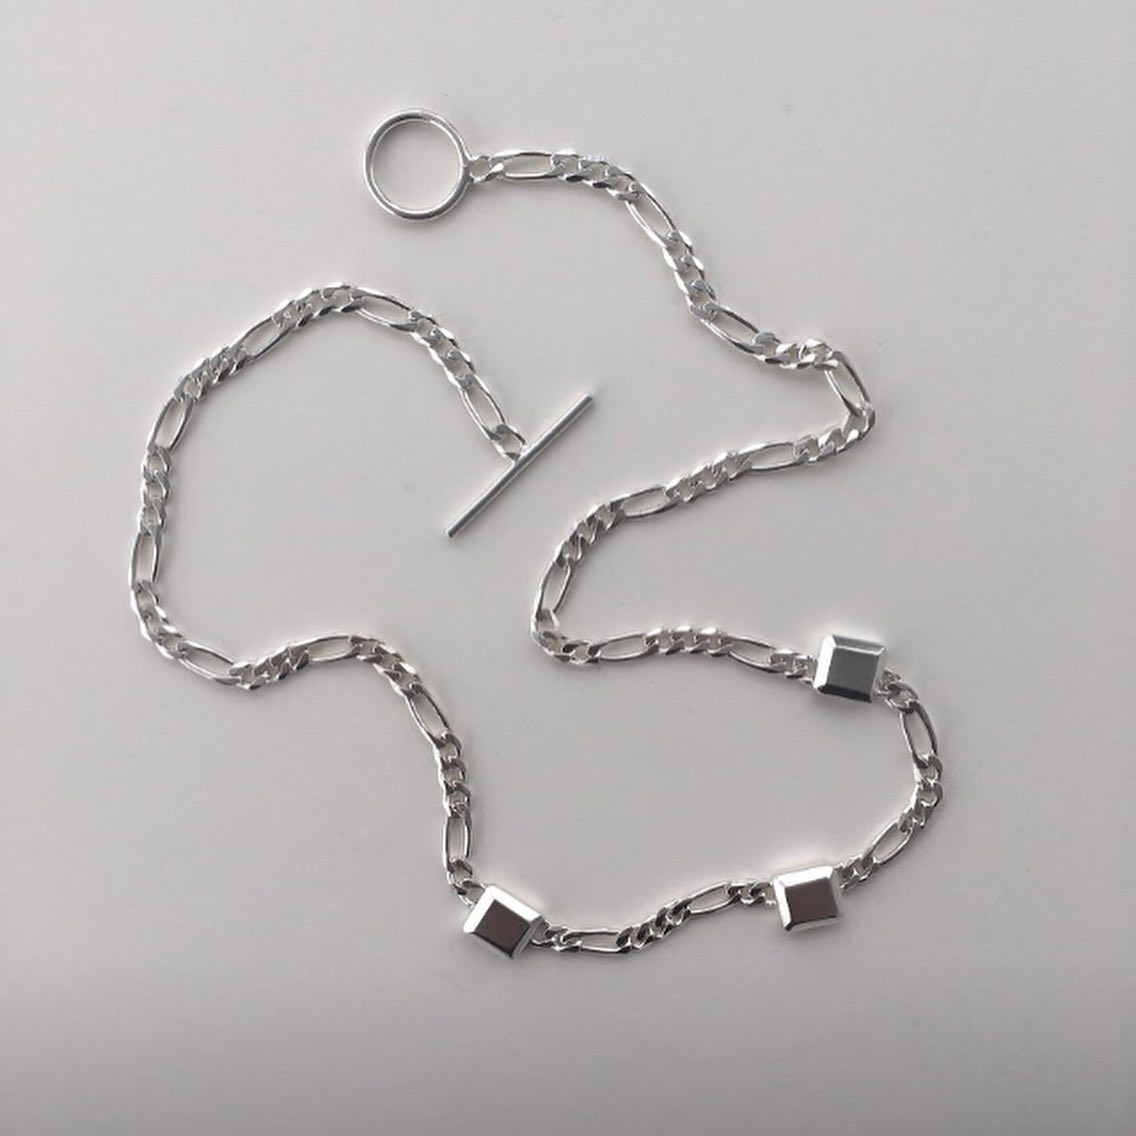 EXMERALDA sterling silver riviere necklace